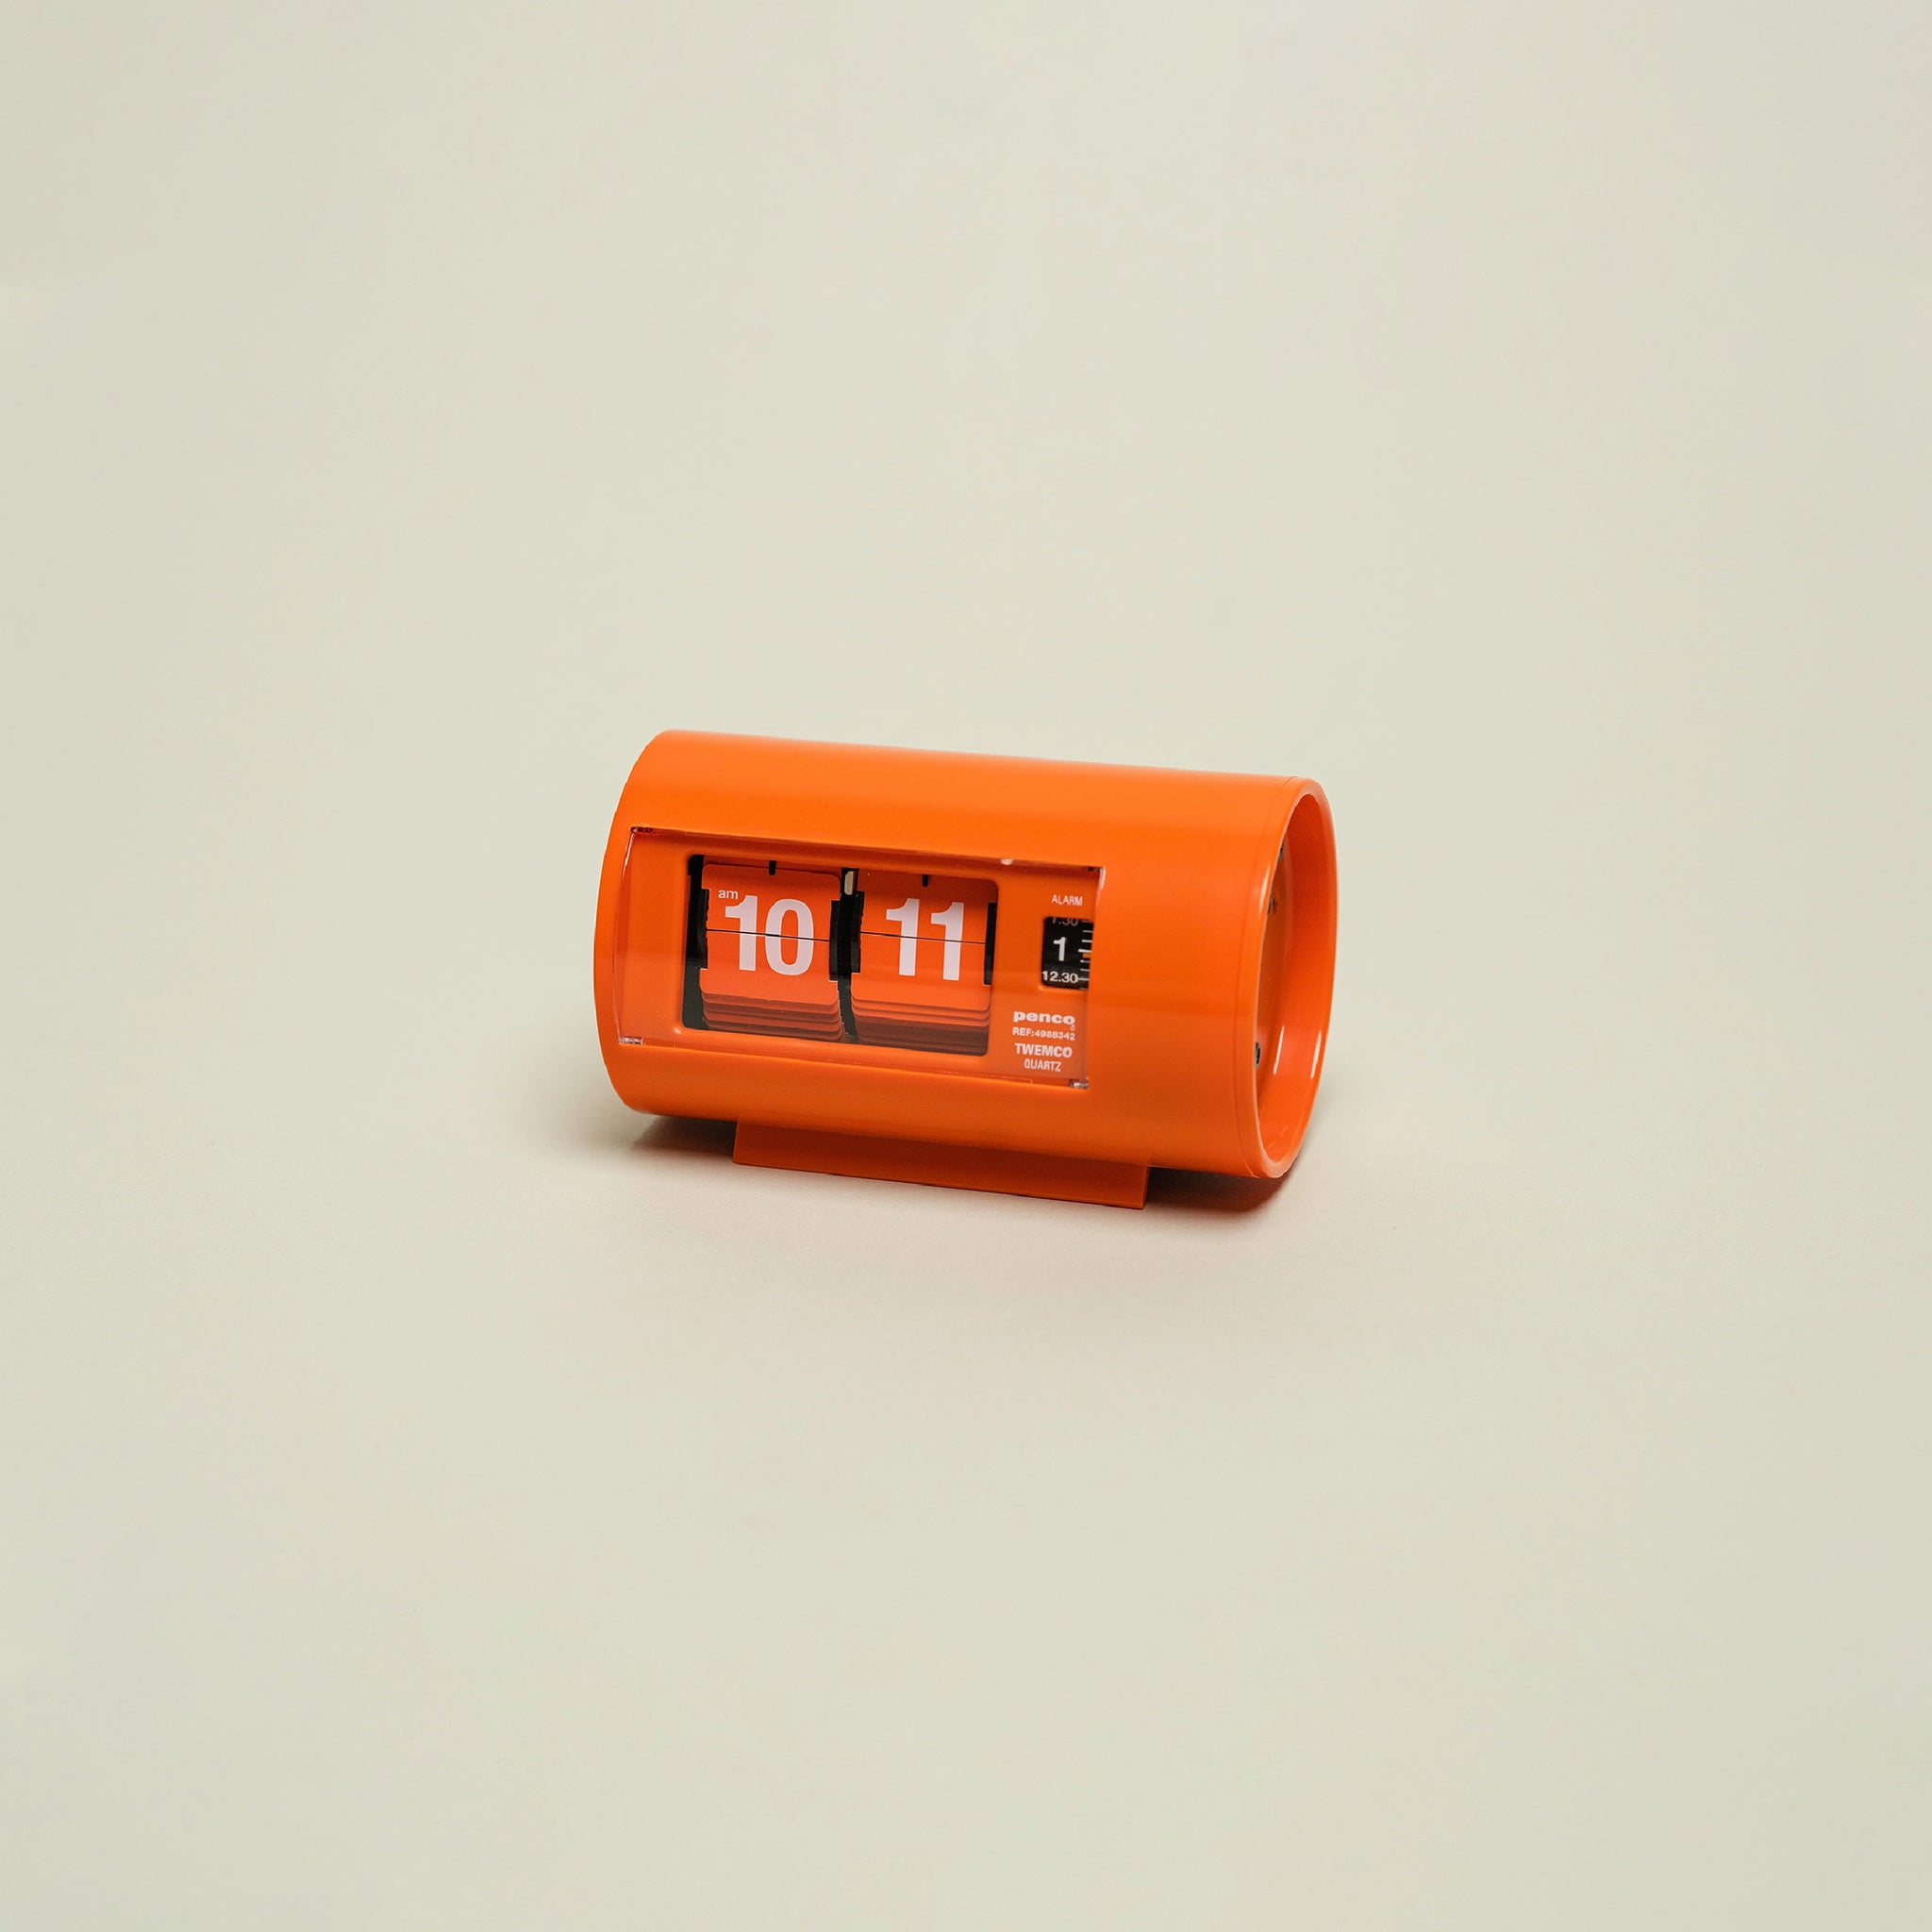 Penco Flip-Style Alarm Clock